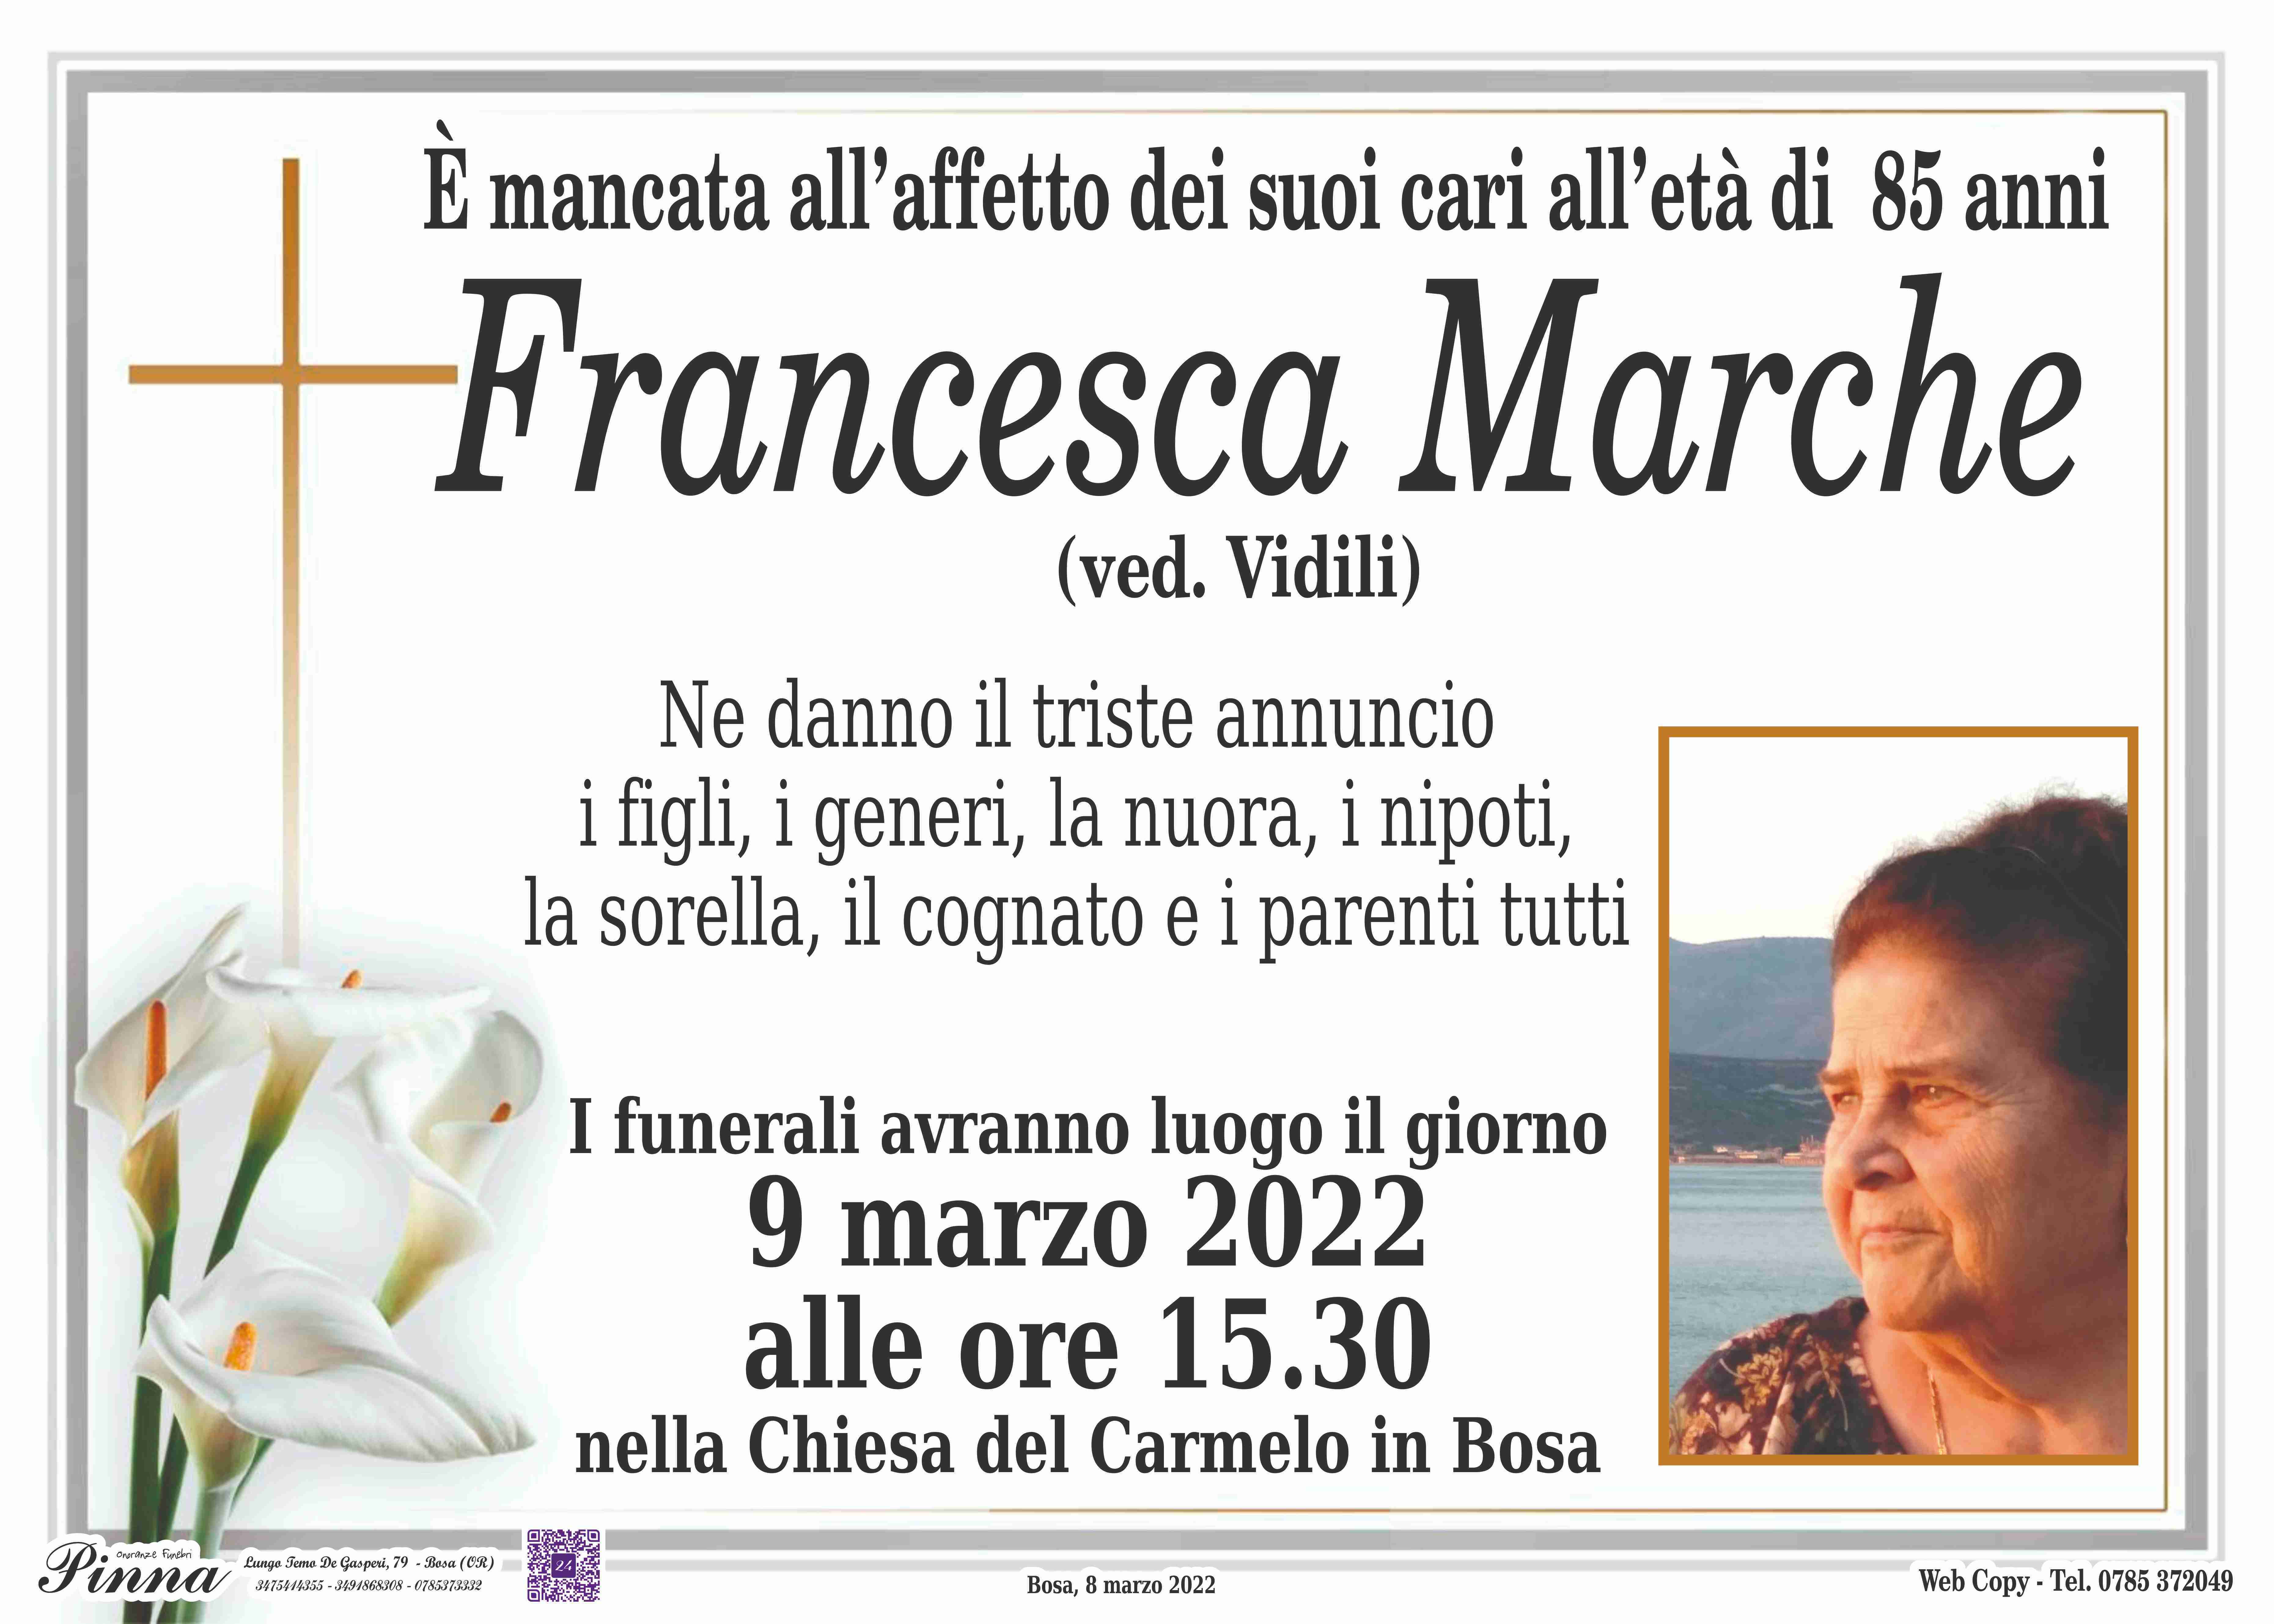 Francesca Marche